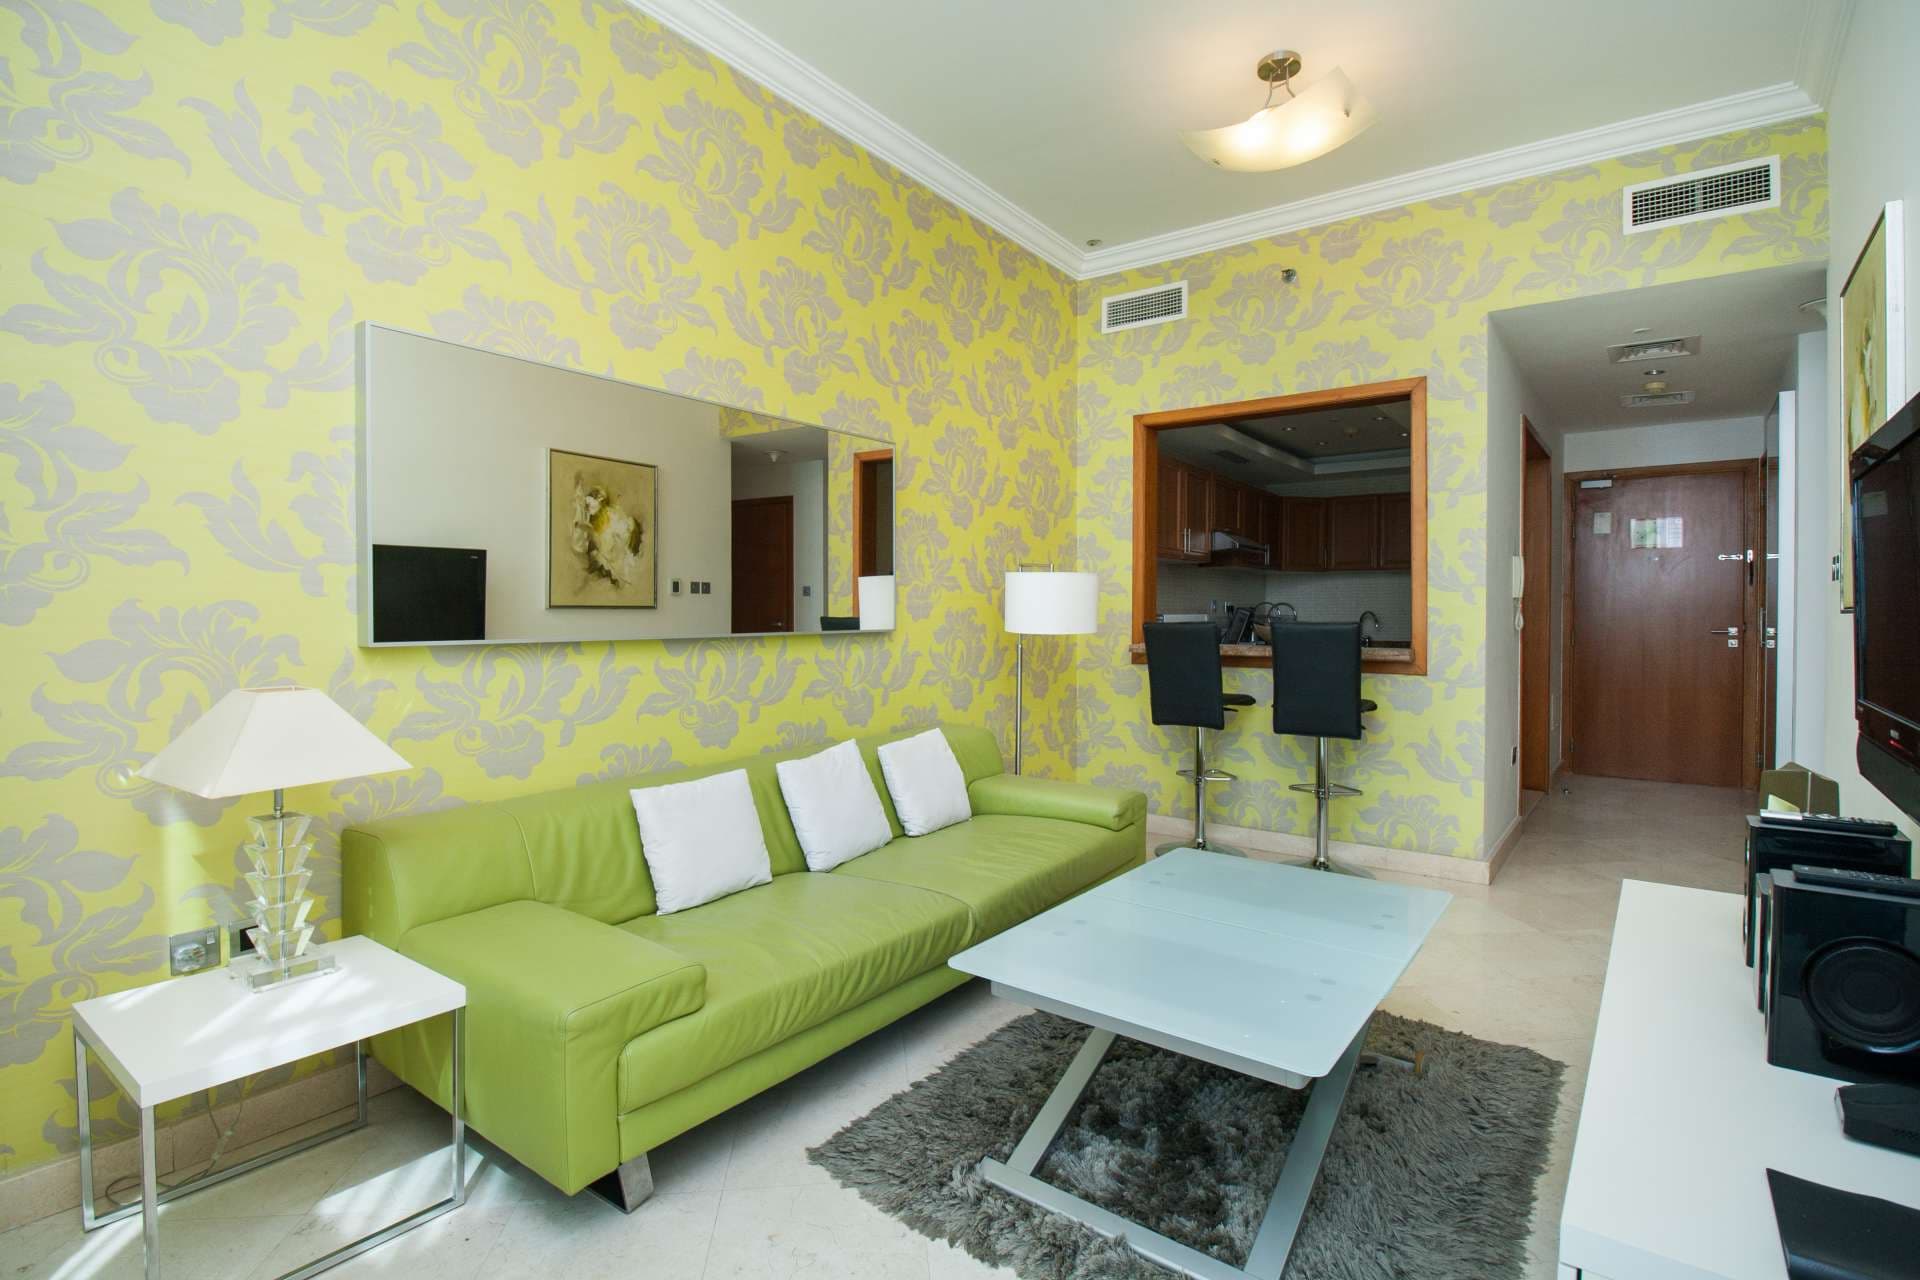 1 Bedroom Apartment For Rent Dorra Bay Lp04866 792dbd5b837d500.jpg